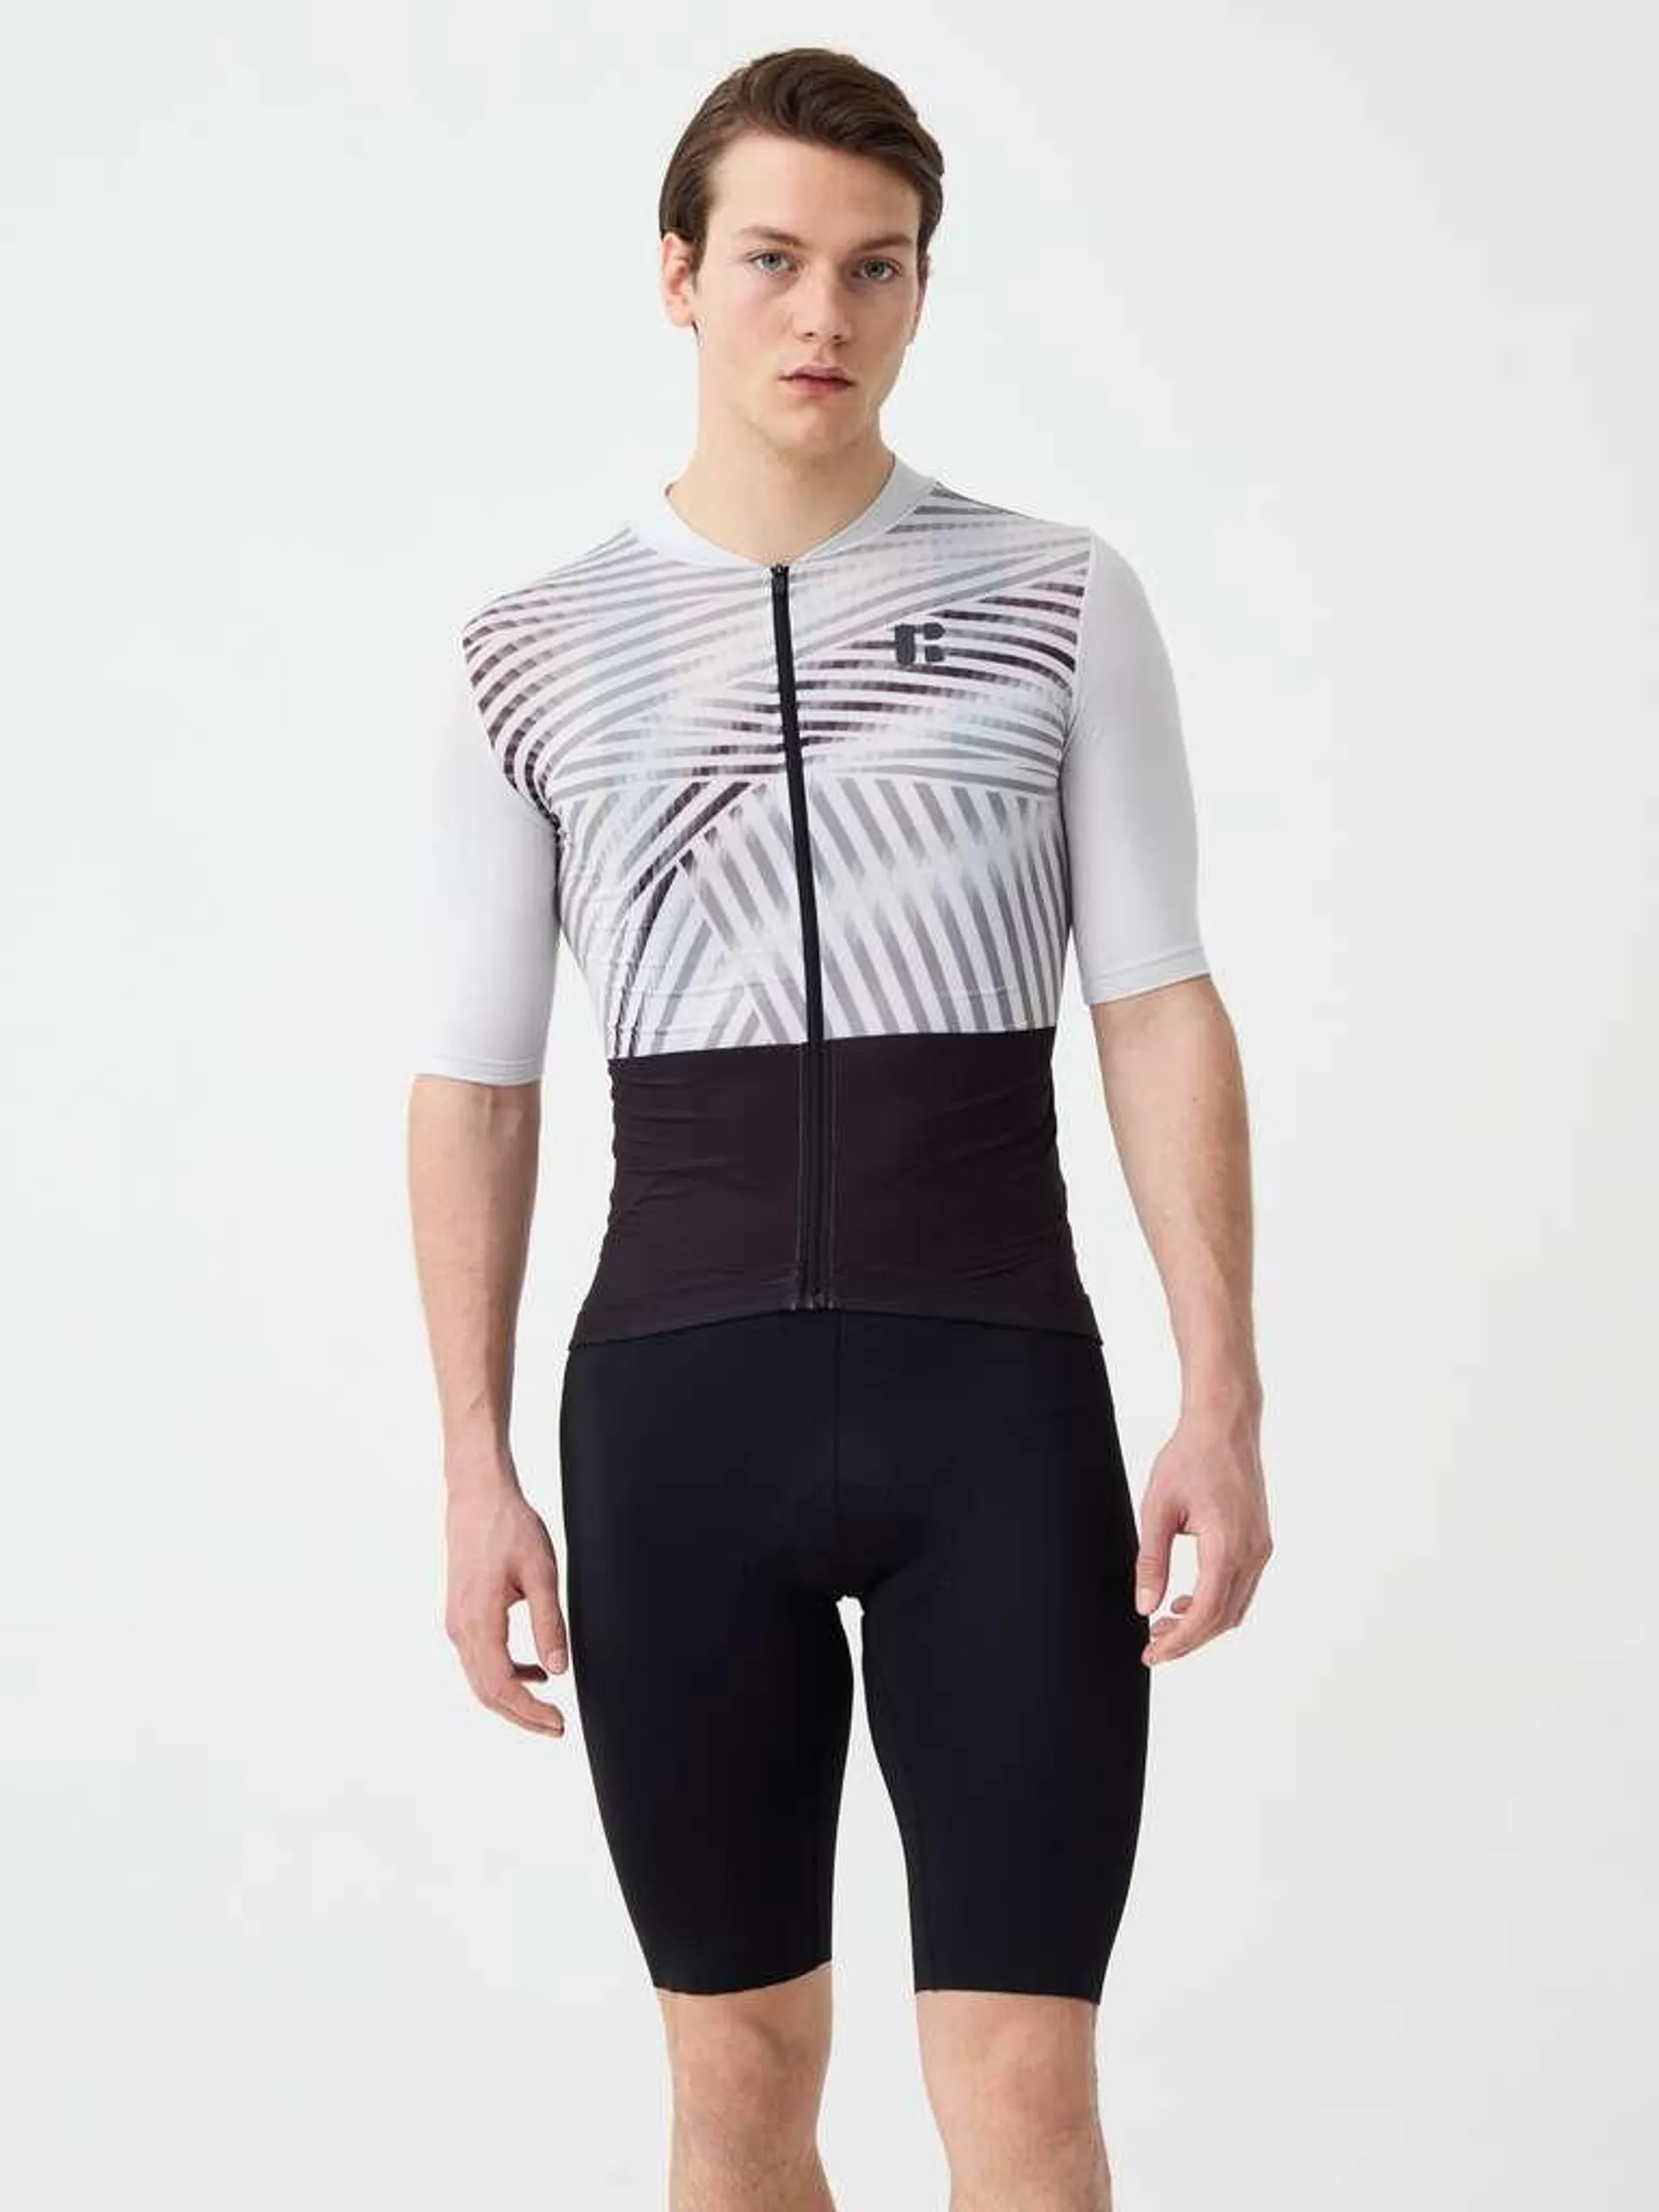 Black/White/Grey Urban Riders full-zip cycle T-shirt with print